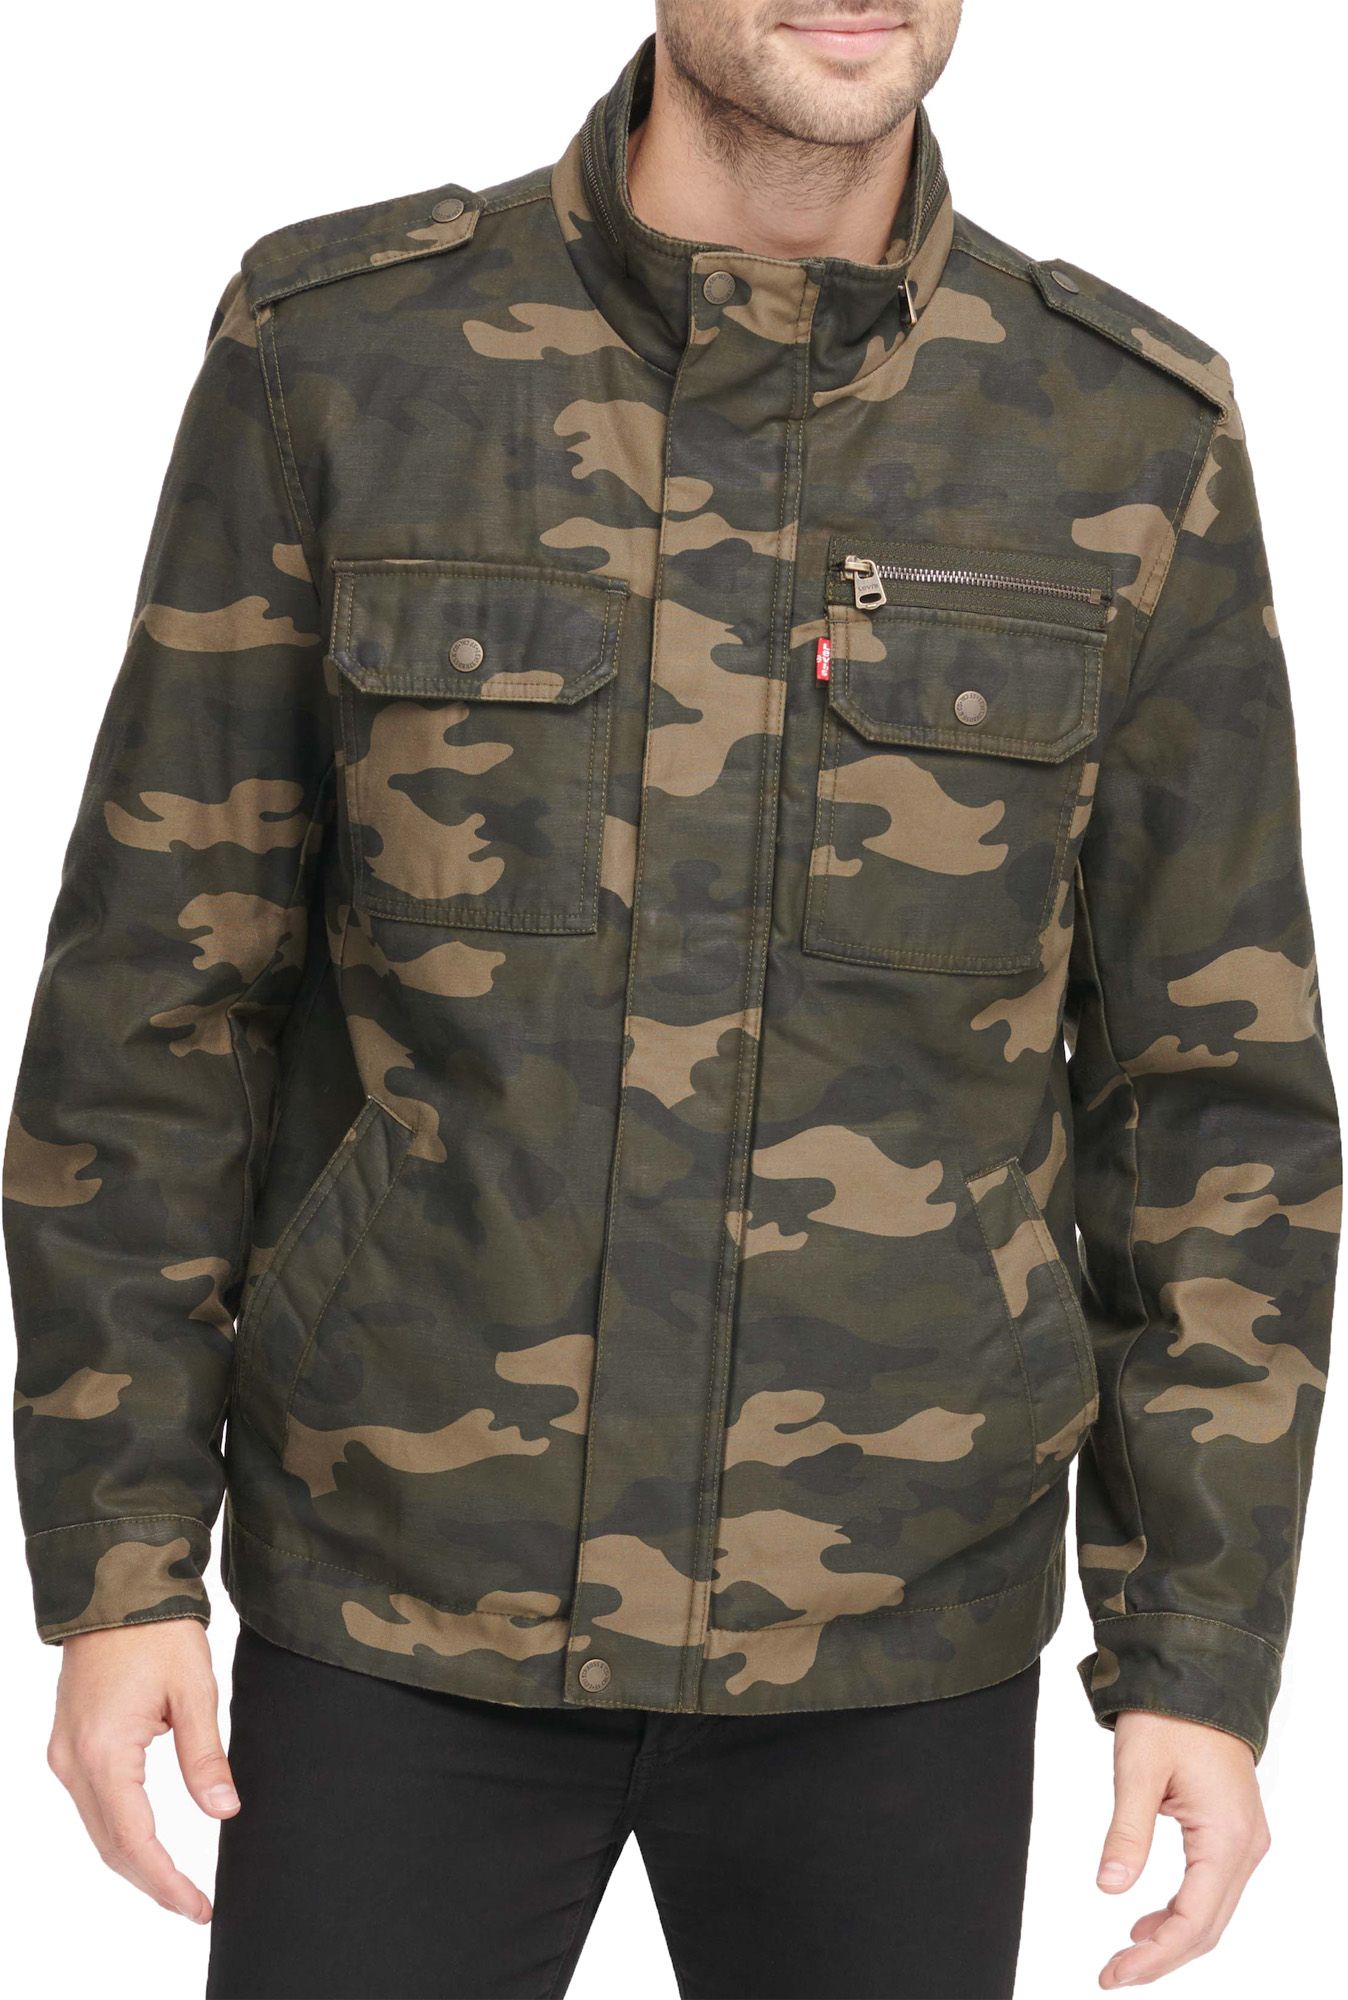 levi's military jacket